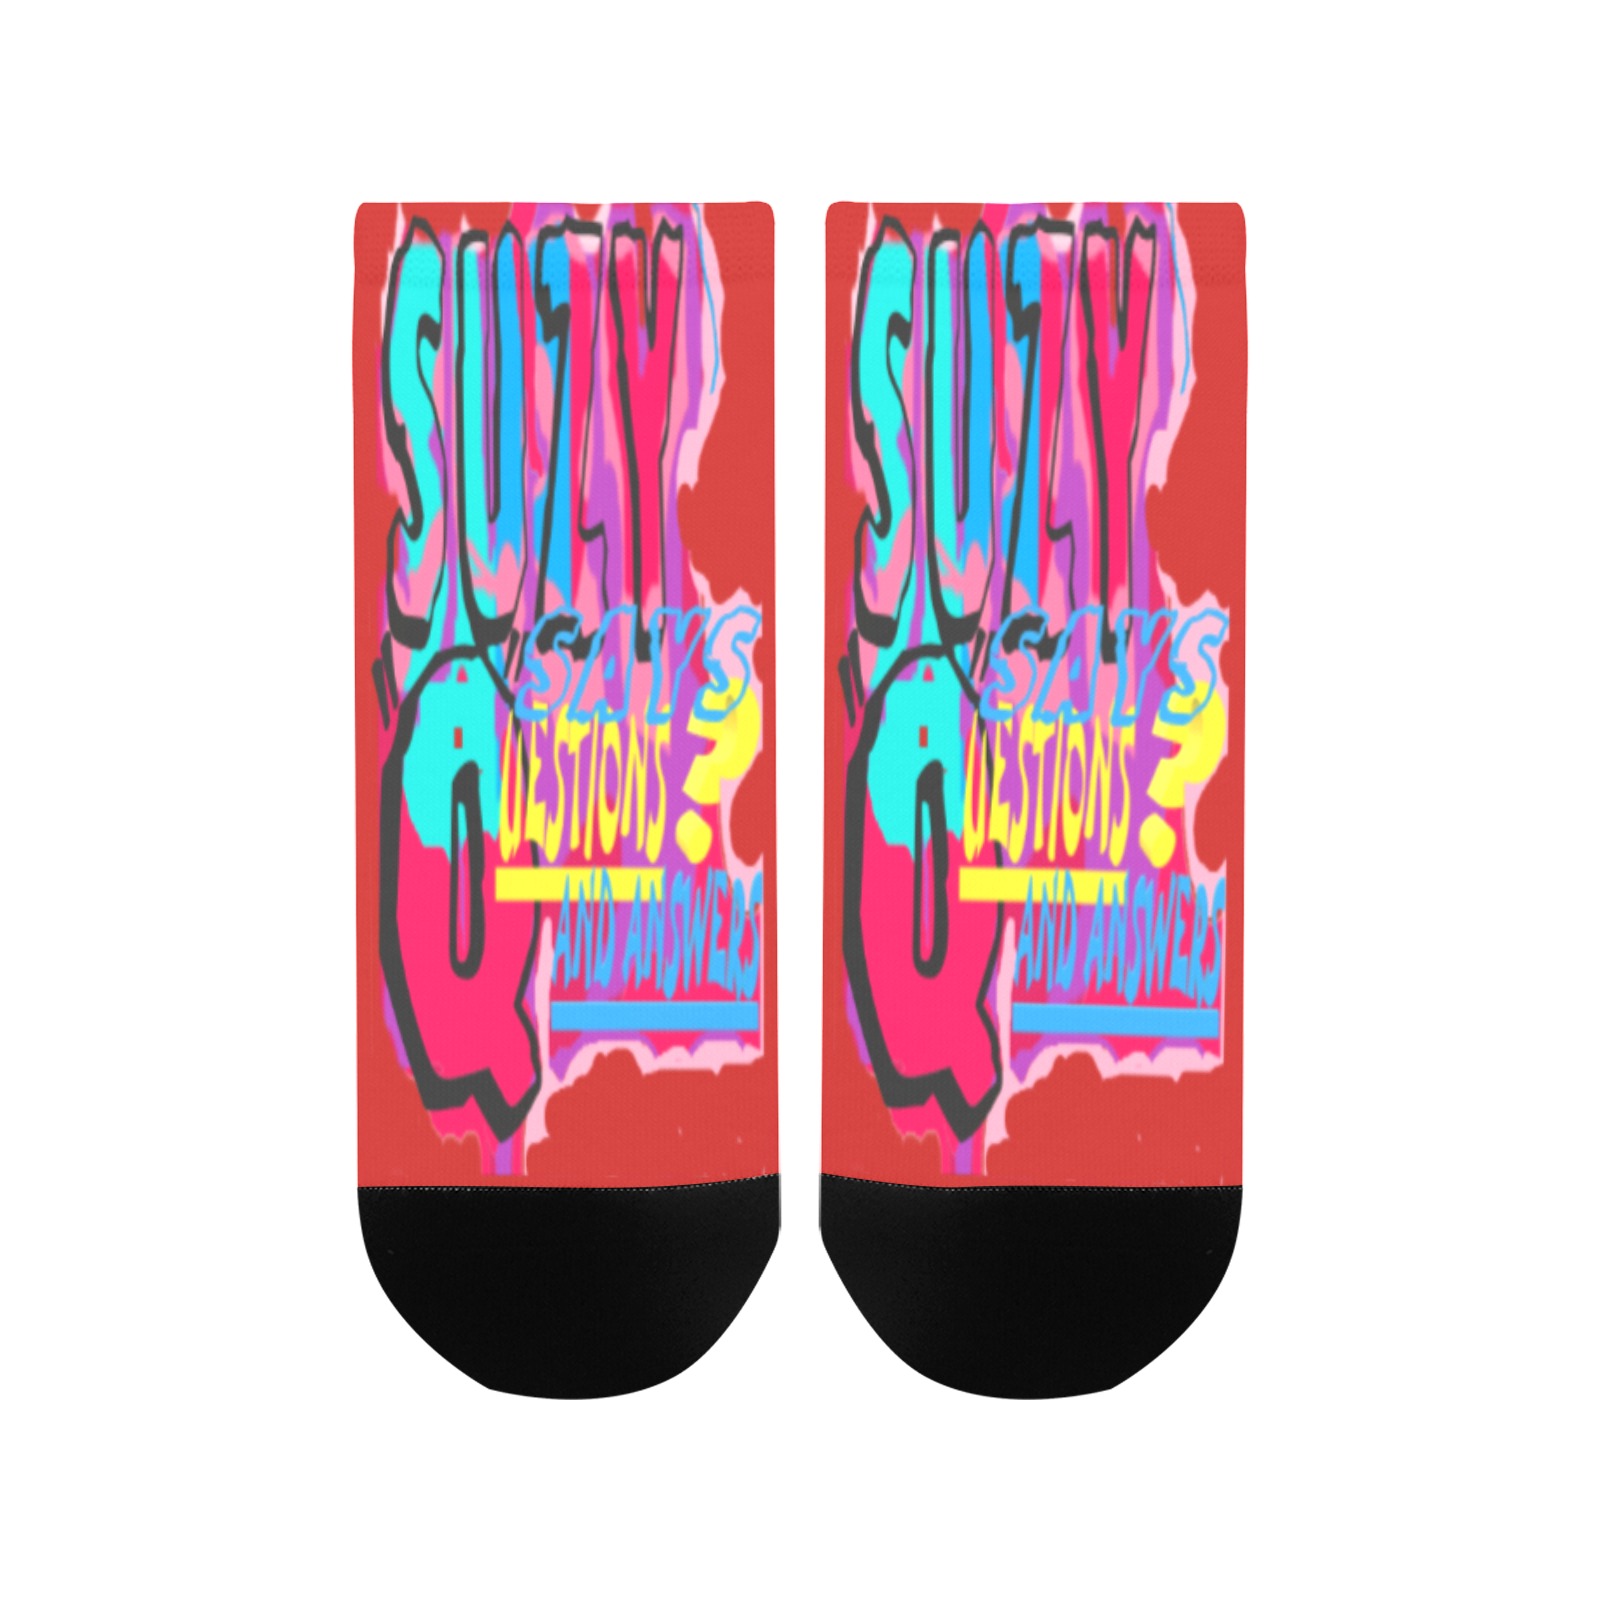 SUZY.Q.LOGO.red.torq Women's Ankle Socks